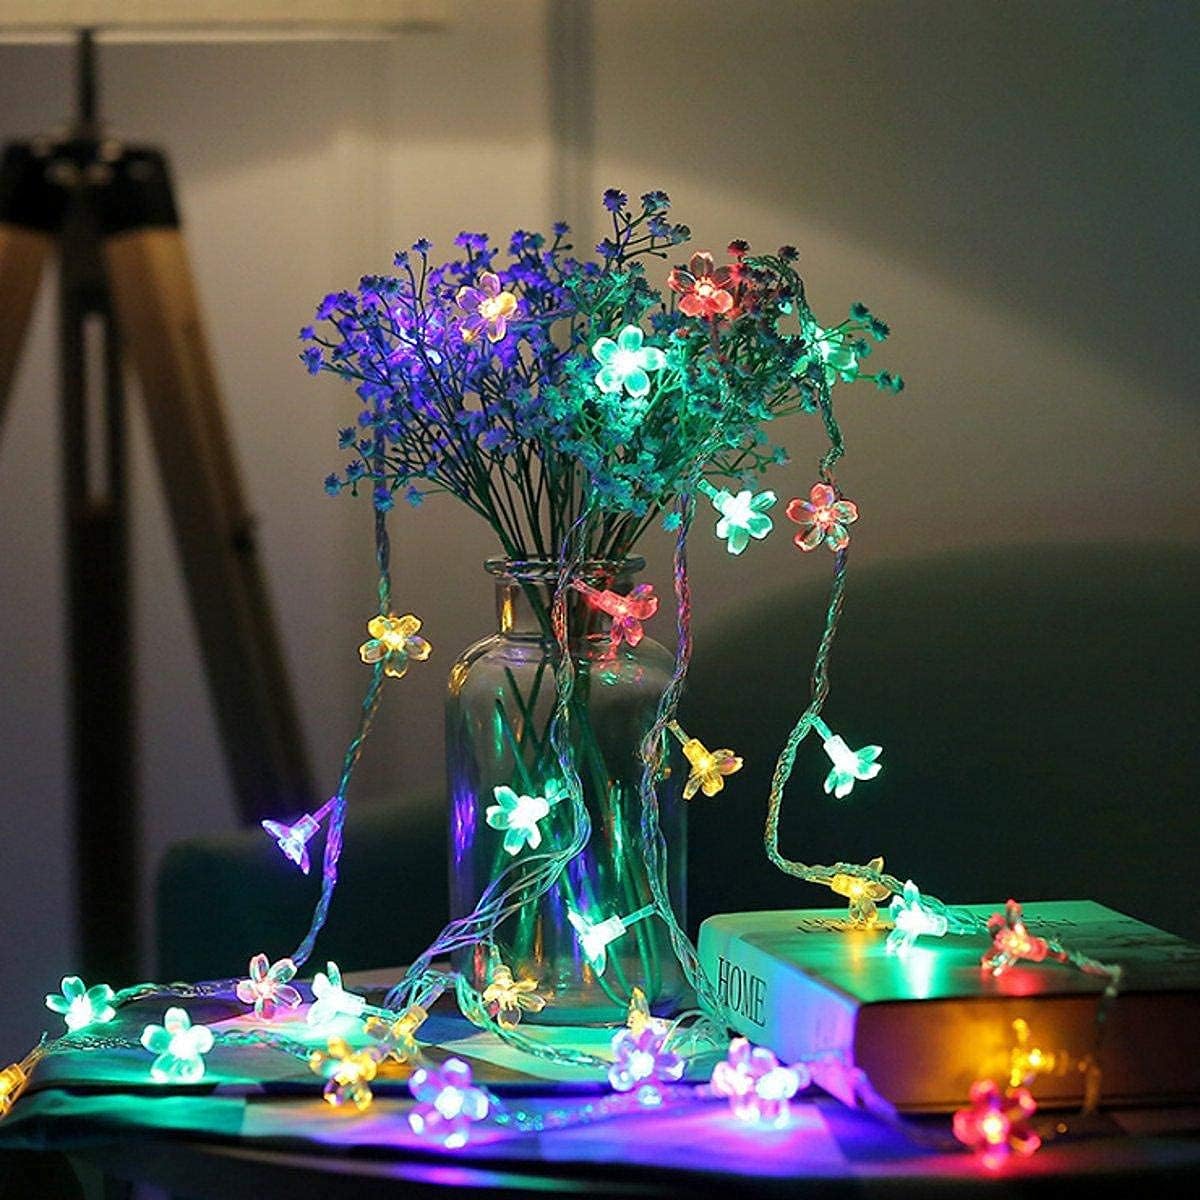 EYUVAA 16 LED Flower Lights for Home Decoration Waterproof Flower Fairy Lights, Flexible Flower Decorative Lights, Flower Lights for Pooja Room, Diwali Lights, Festival (14 Feet, Multicolor)